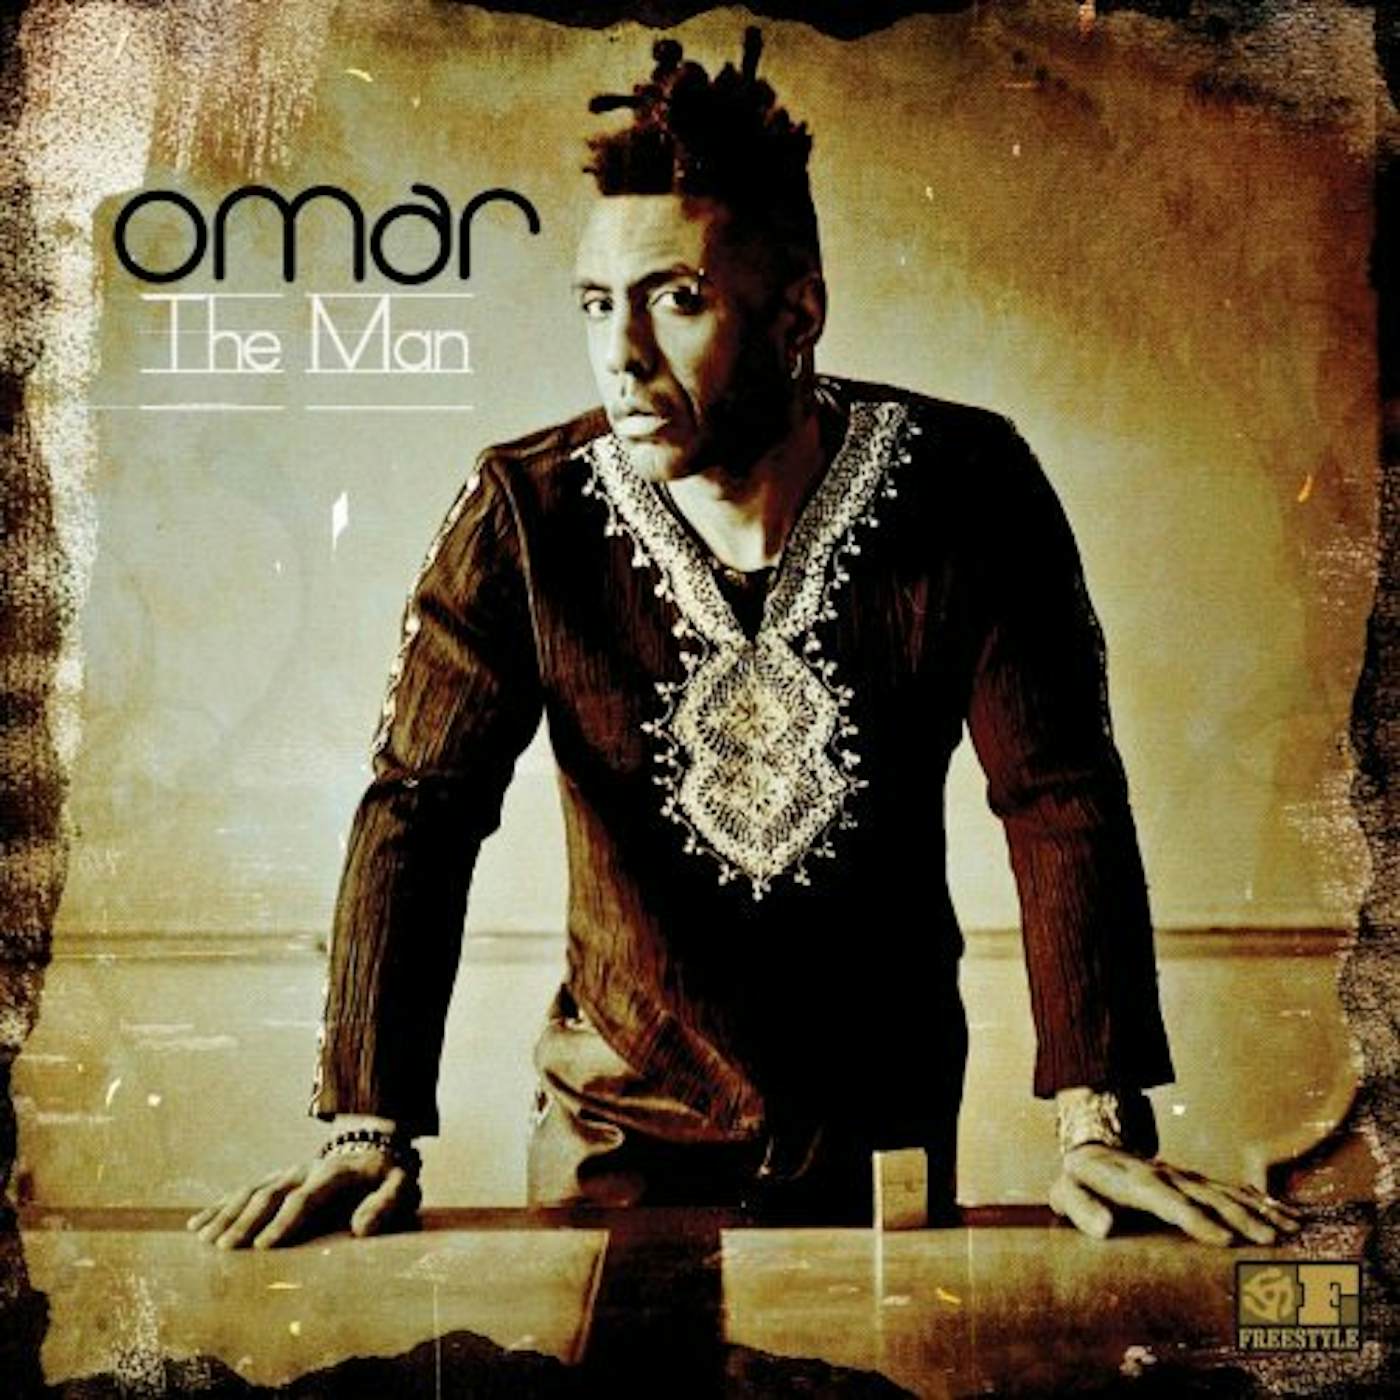 Omar MAN Vinyl Record